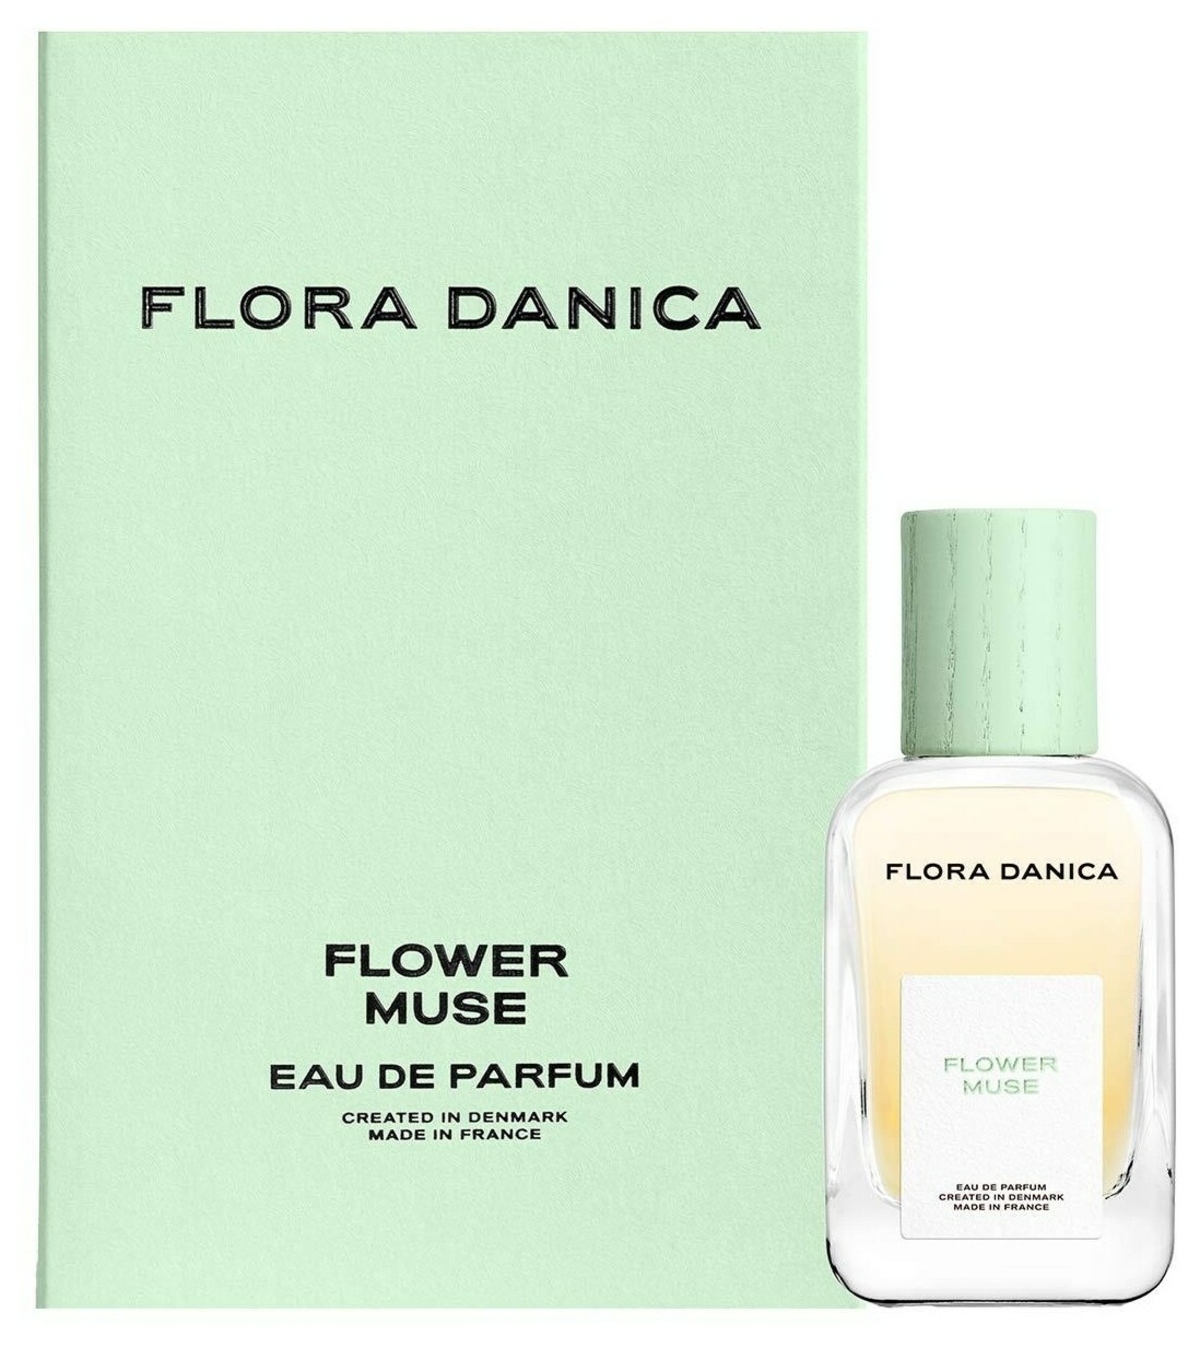 Flower Muse - Flora Danica